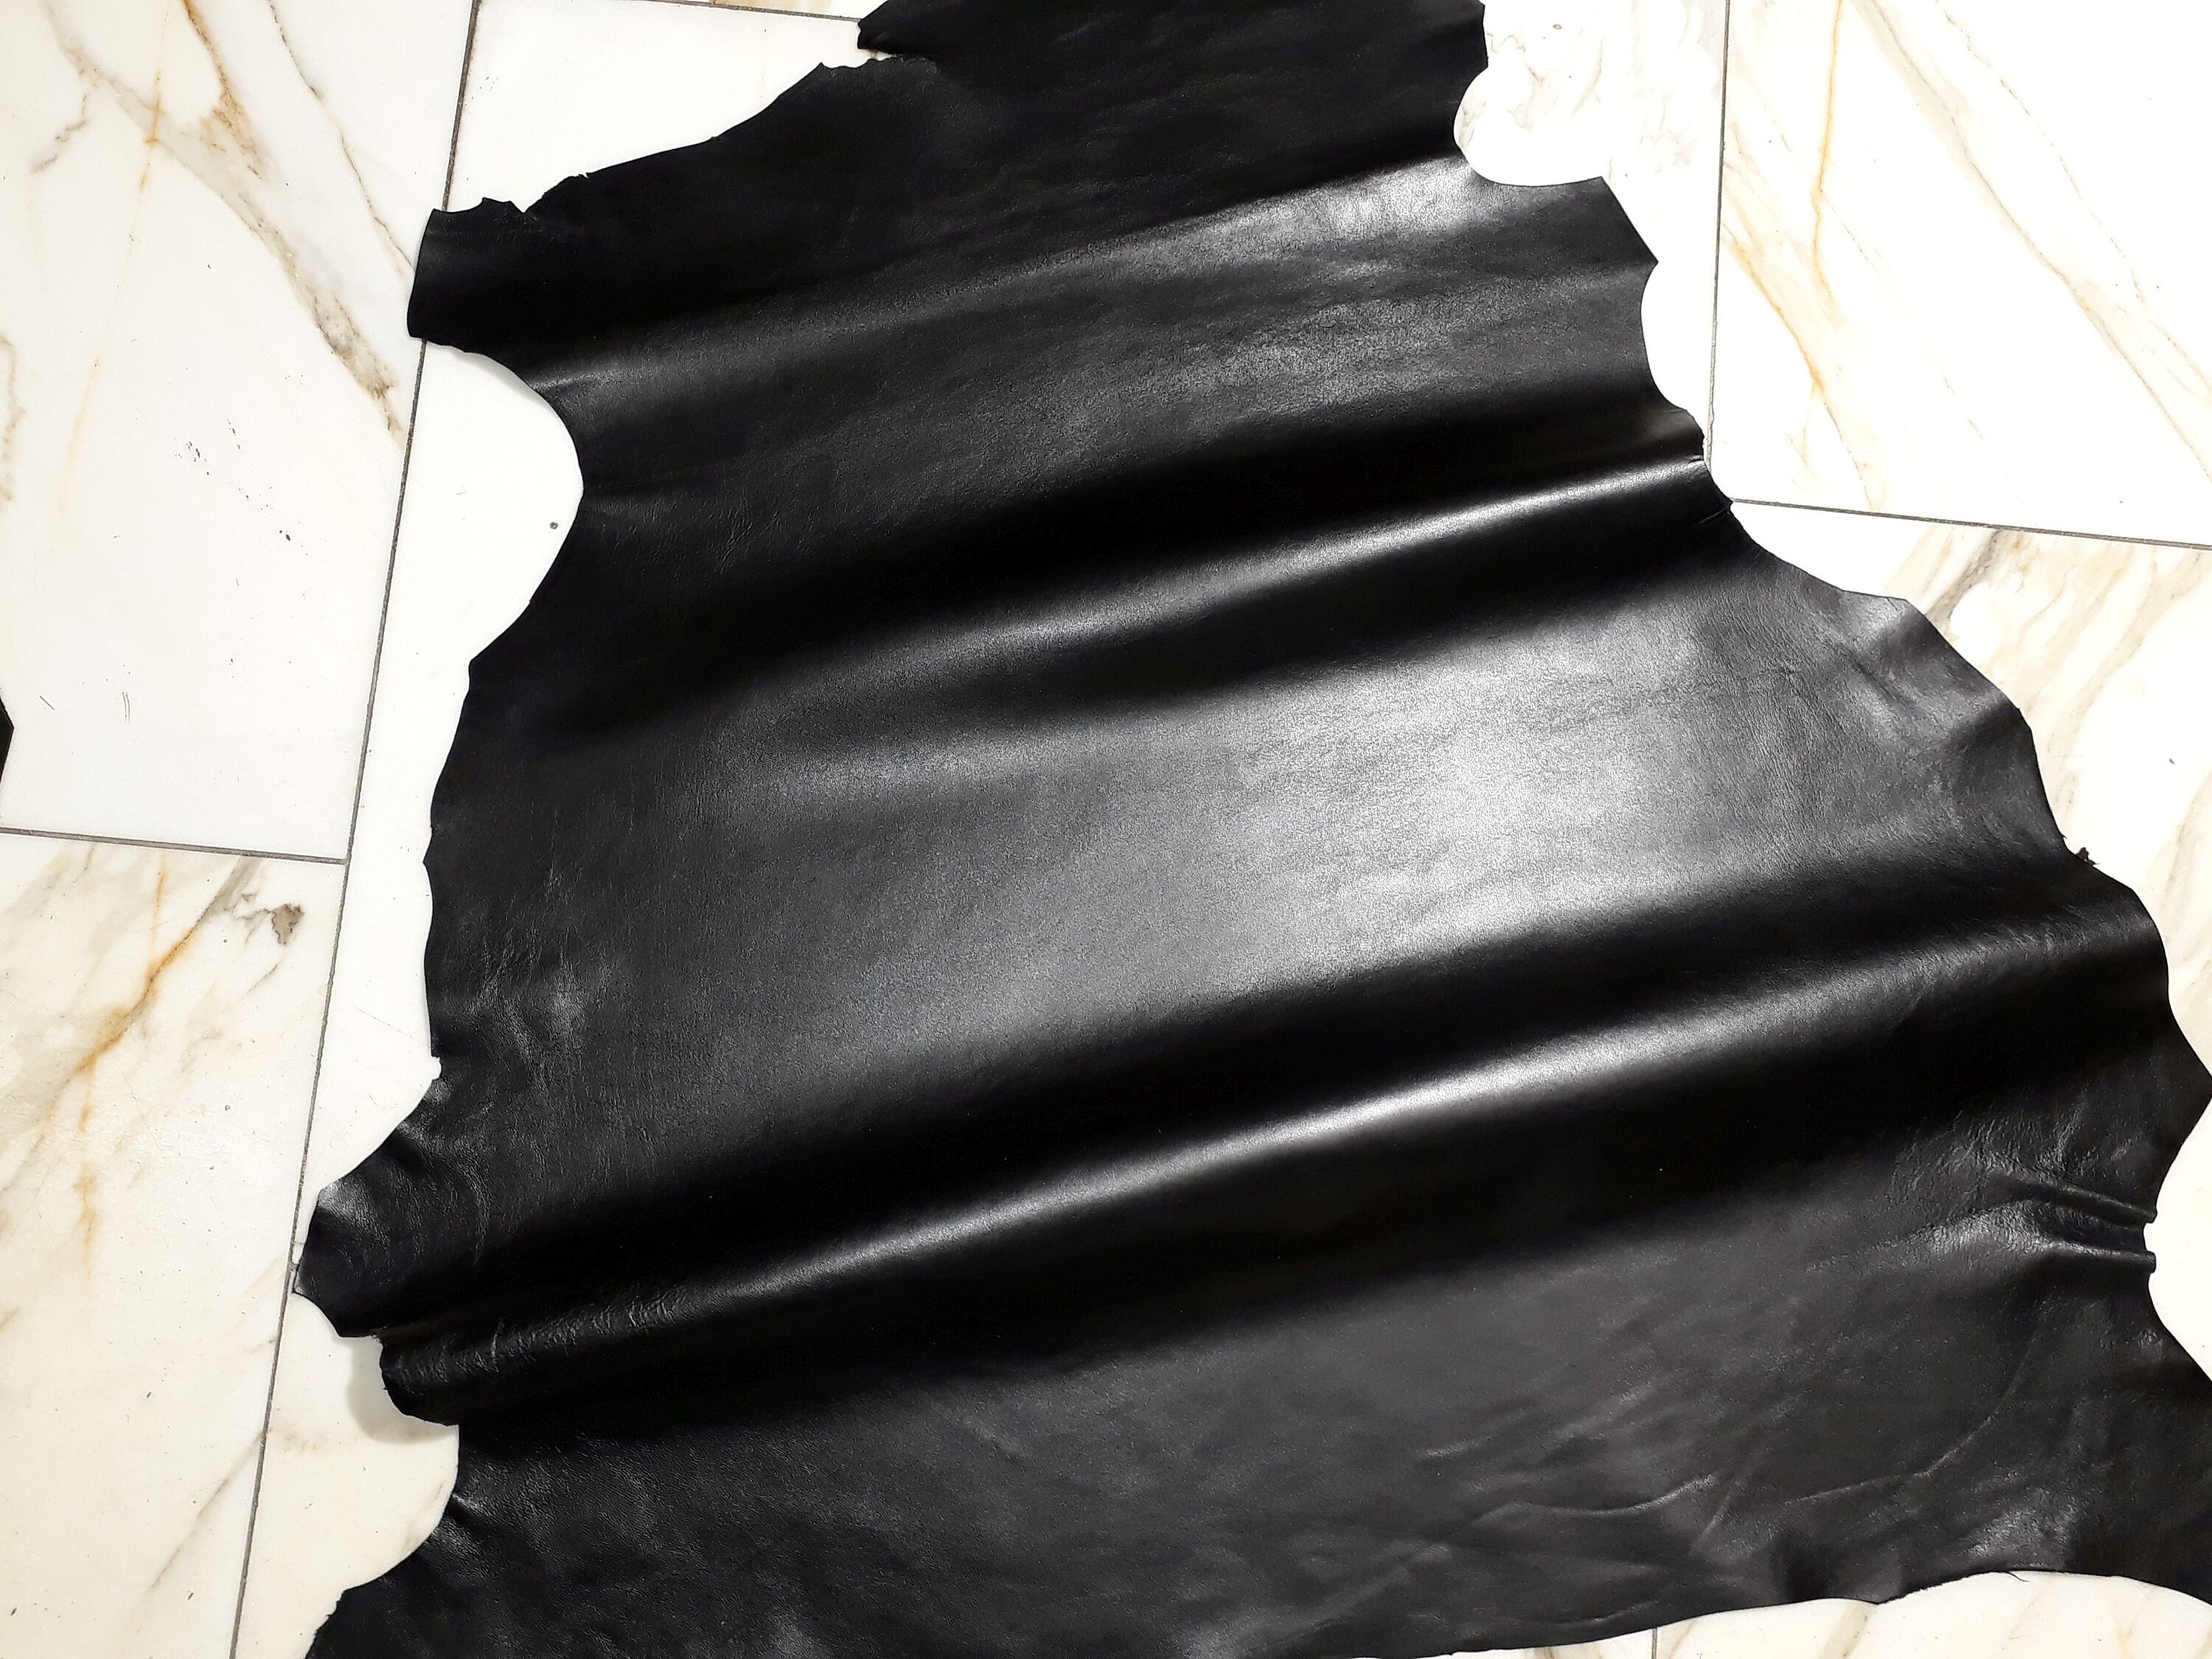 Fiebing's Leather Dye - 4oz (Cannot Ship to CA, HI, AK and International)